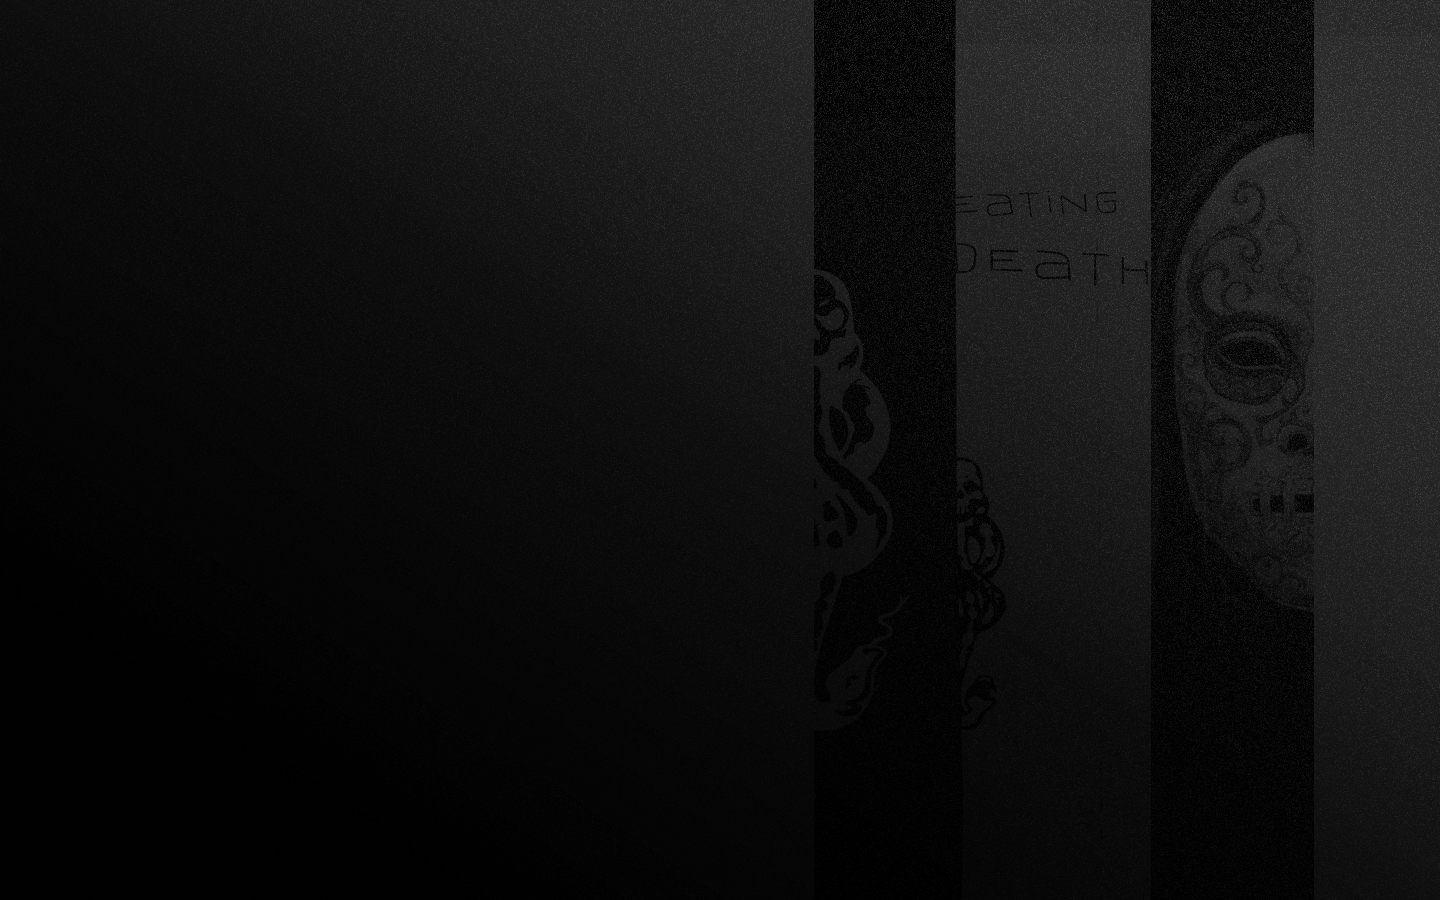 Very Dark Death Eater Wallpaper by peppermintfrogs on DeviantArt